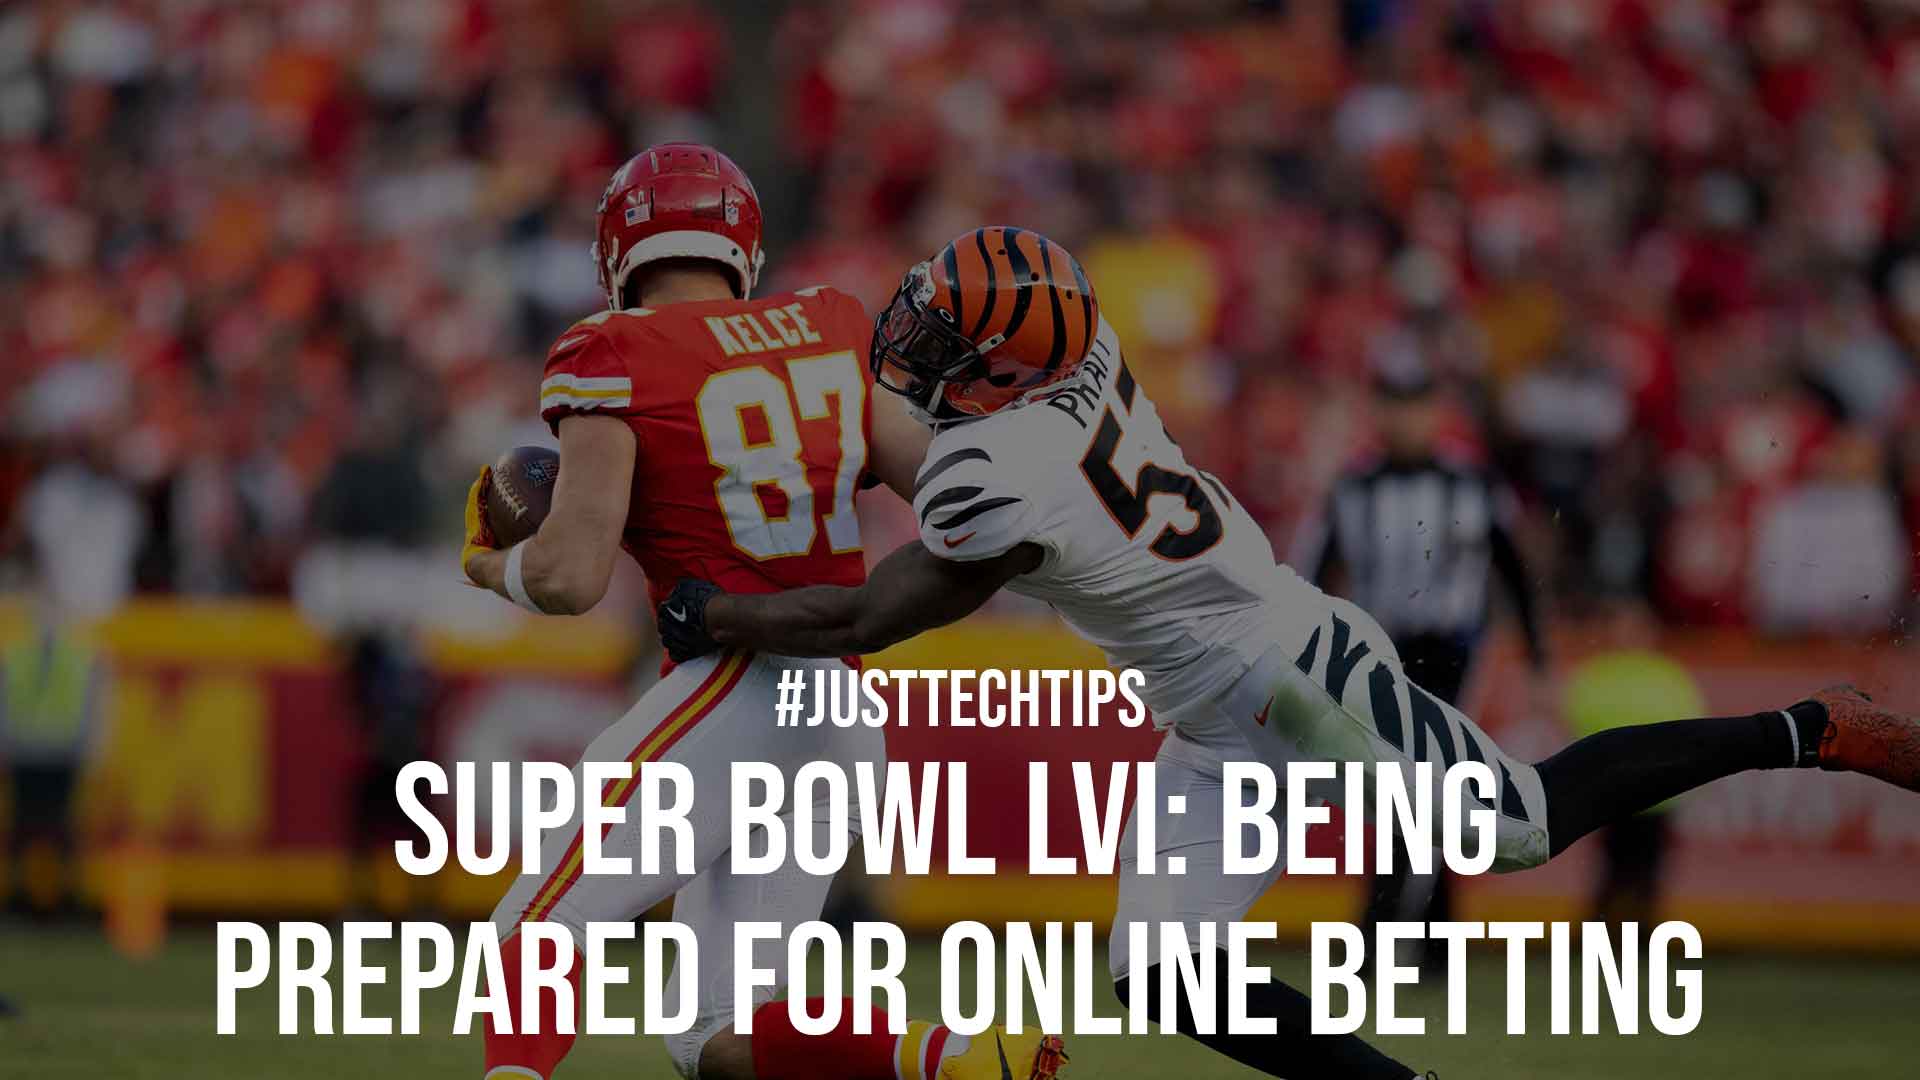 Super Bowl LVI Being Prepared For Online Betting